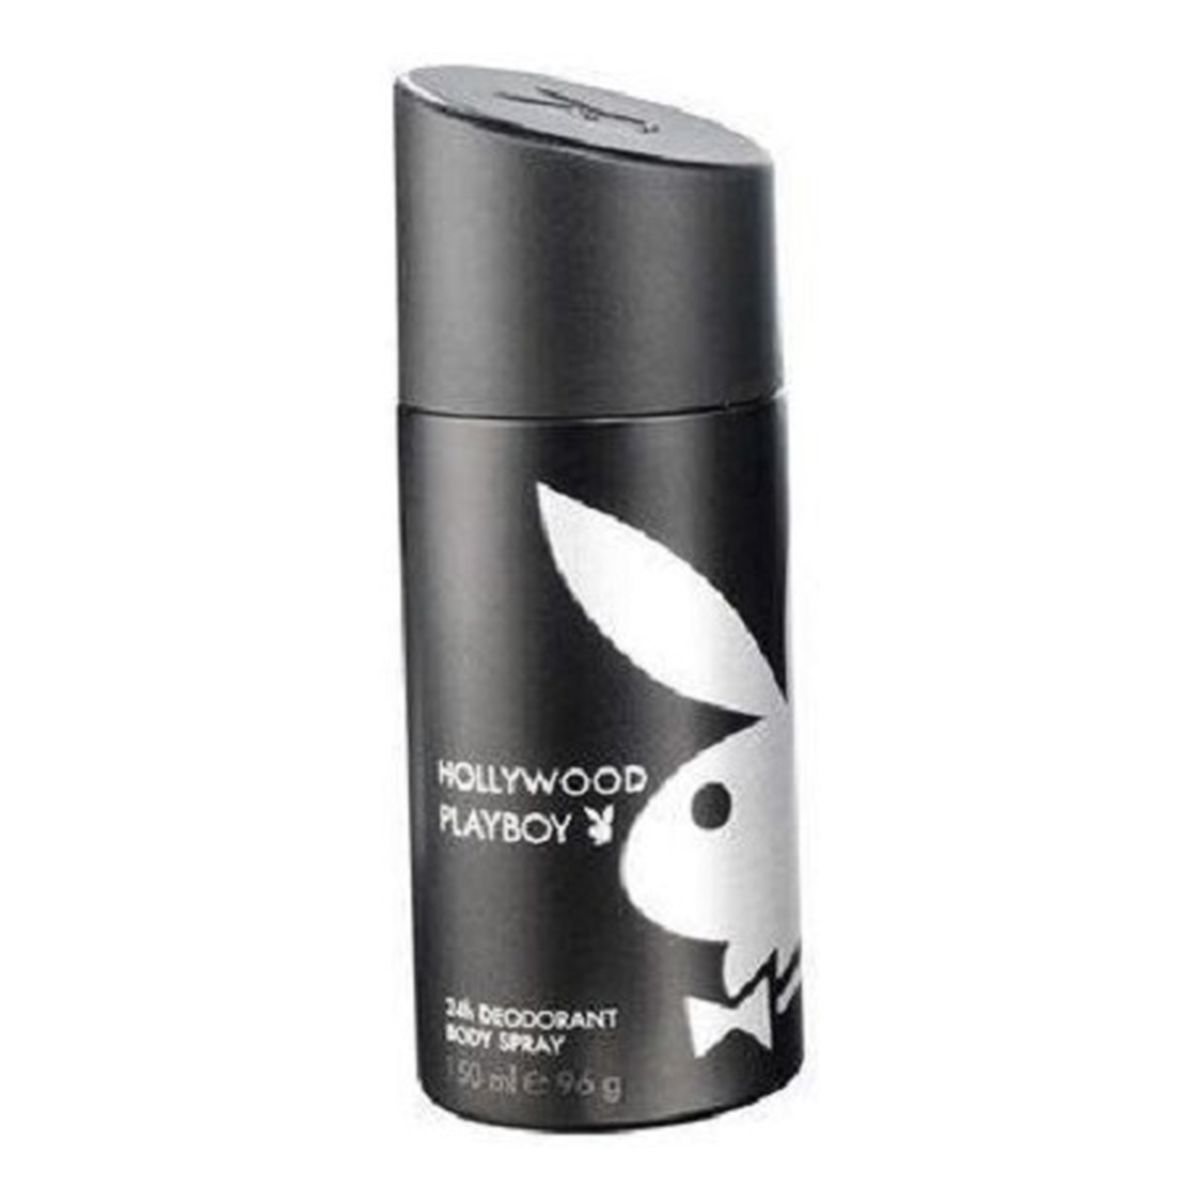 Playboy Hollywood Dezodorant spray 150ml